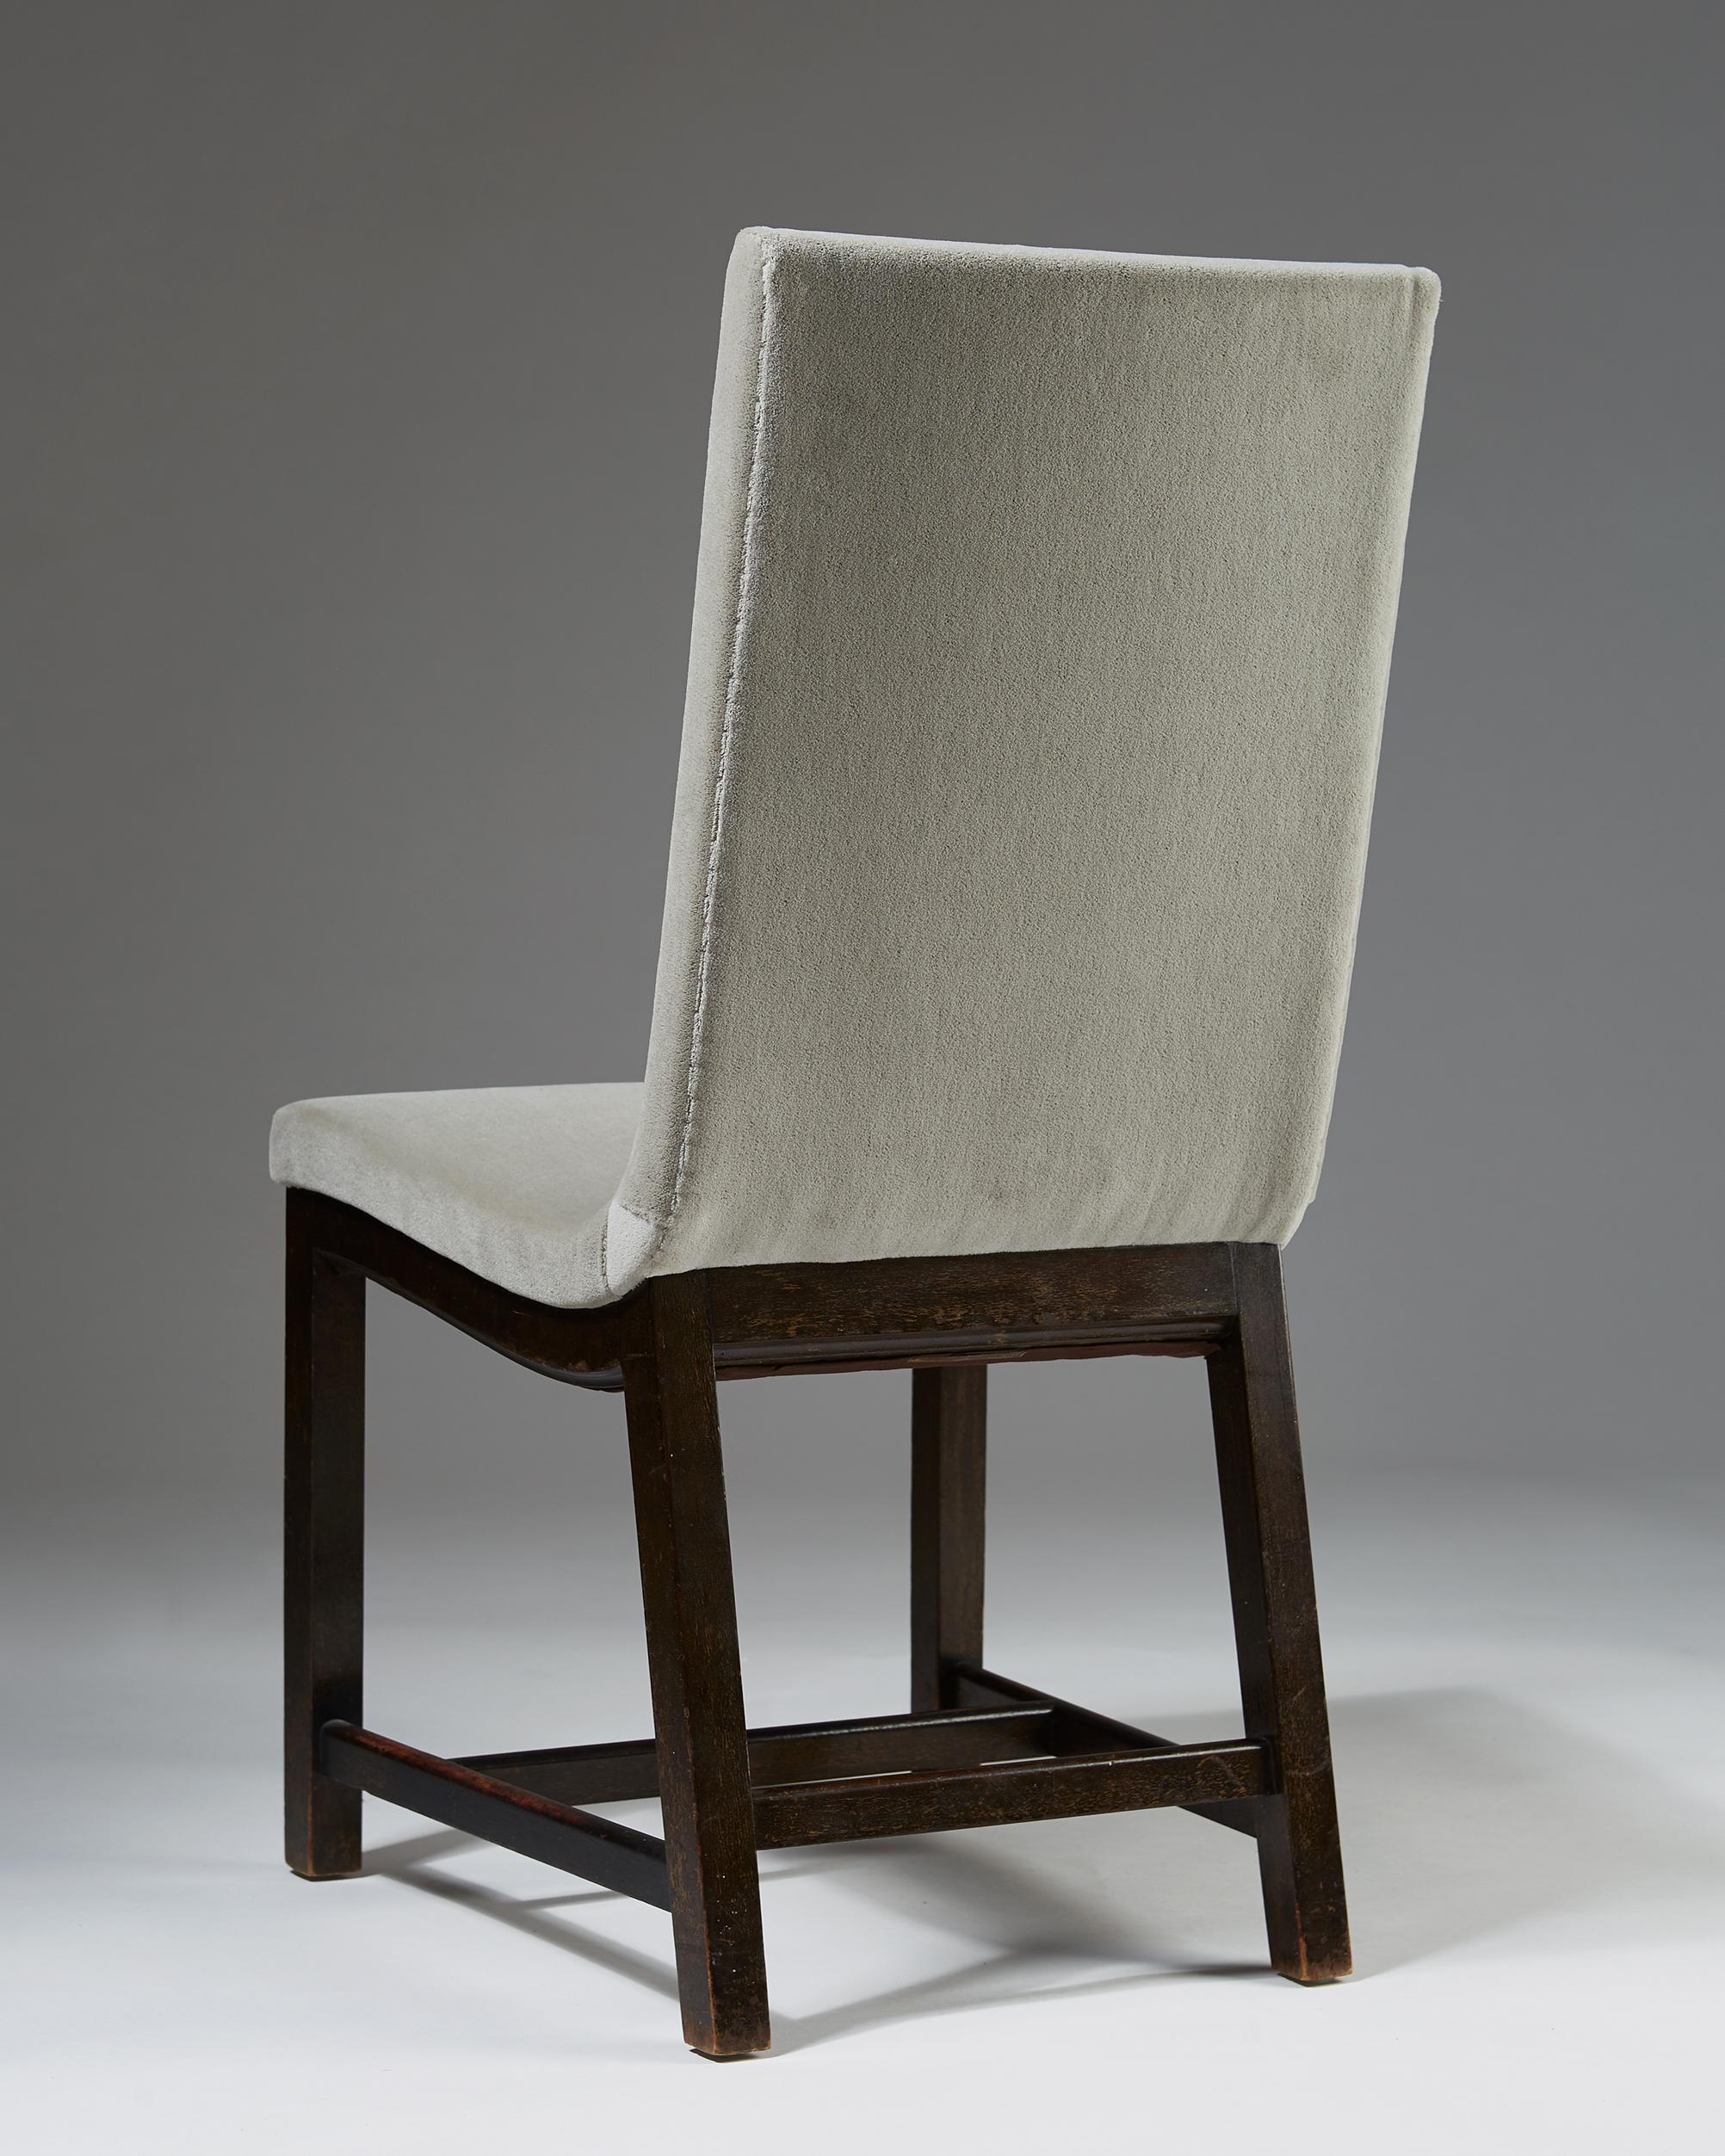 Mid-20th Century Set of Three Chairs “Typenko” by Axel Einar Hjorth, Nordiska Kompaniet, Sweden For Sale